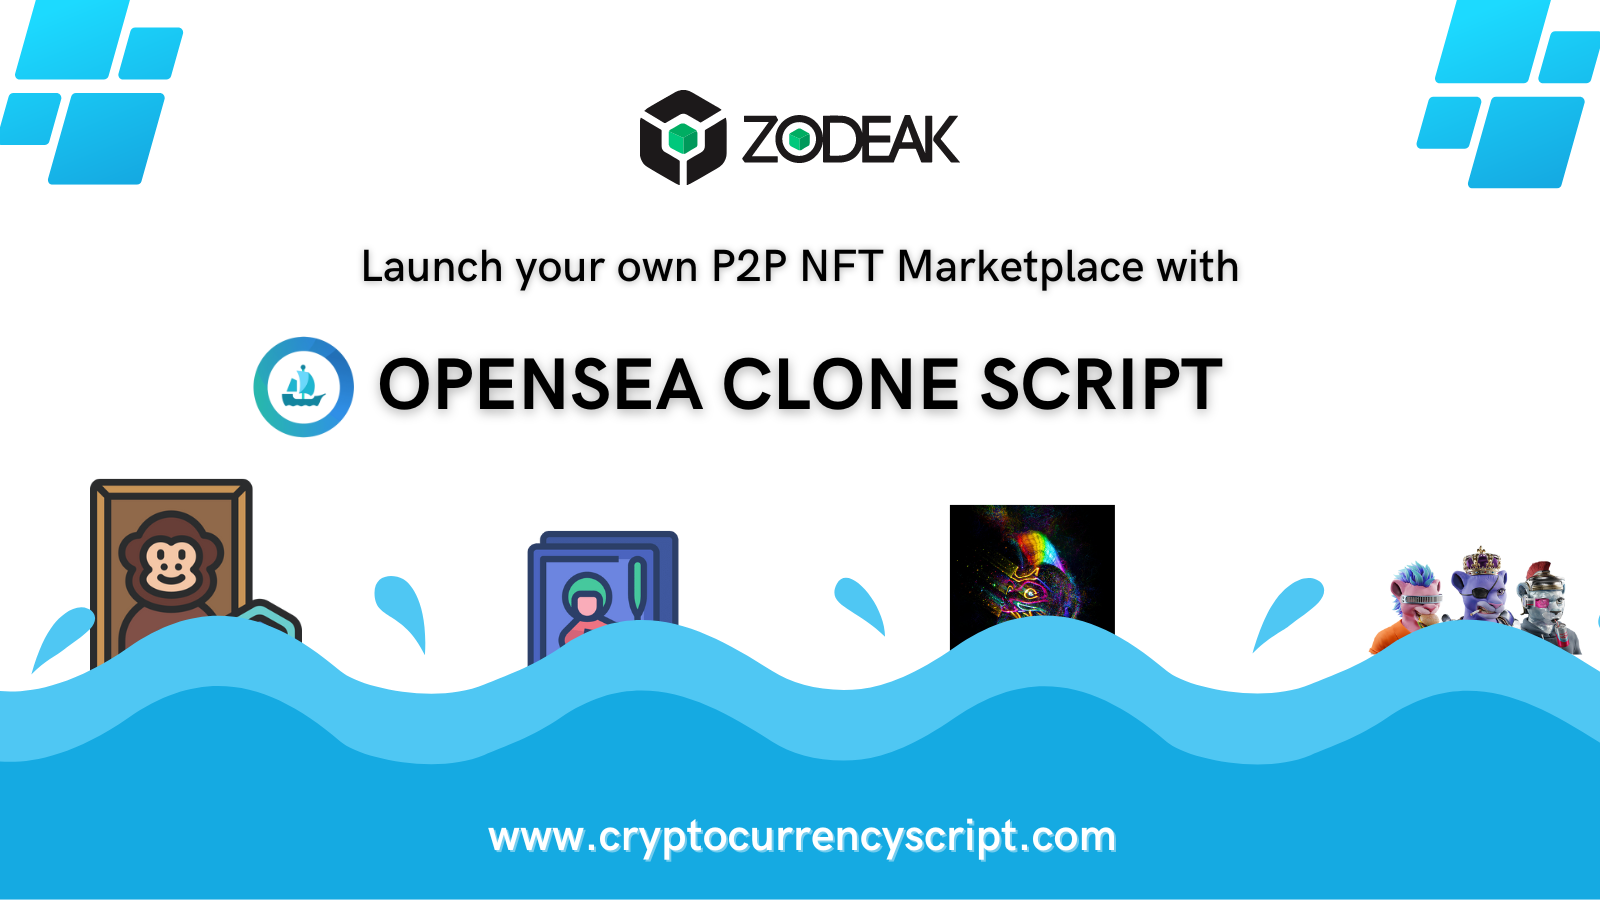 OpenSea Clone Script – To Create P2P NFT Marketplace like OpenSea